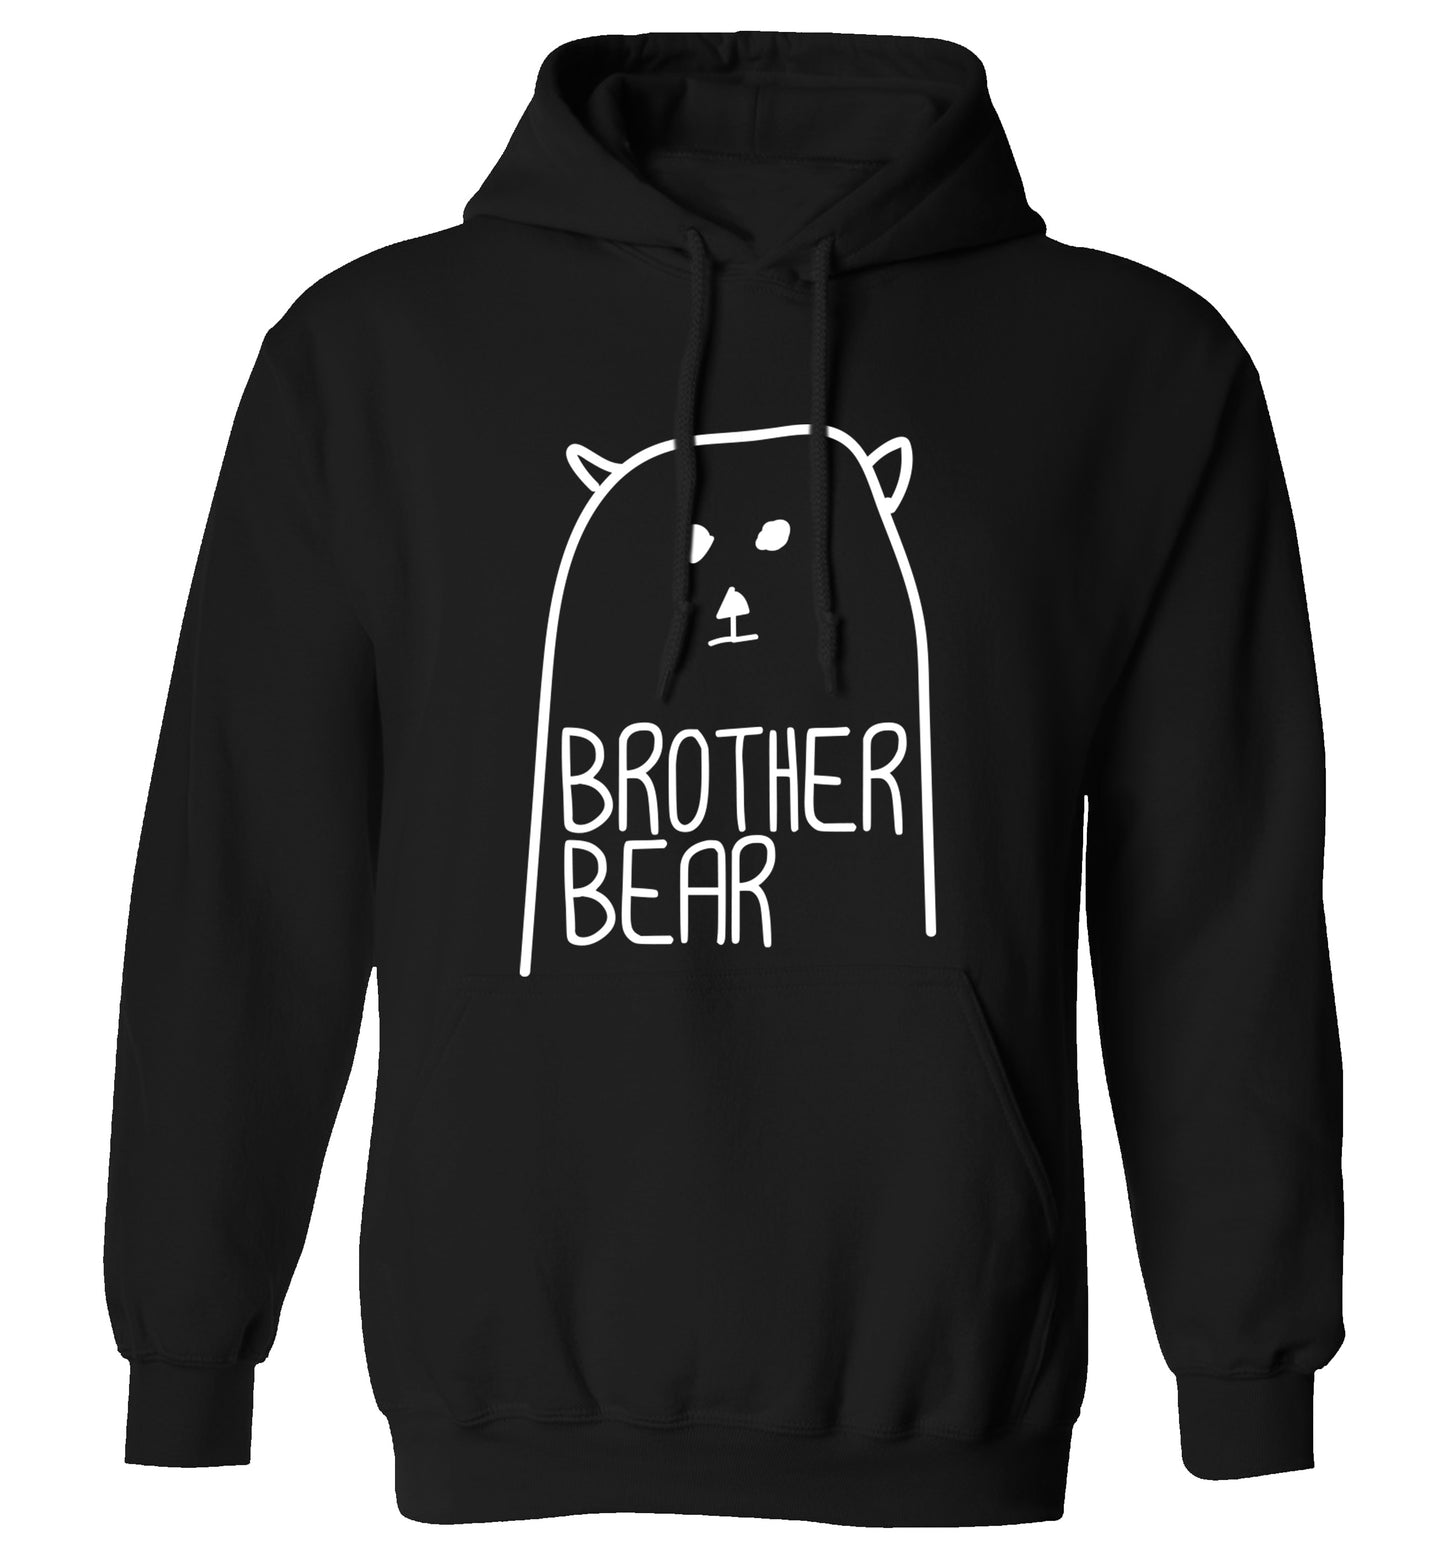 Brother bear adults unisex black hoodie 2XL